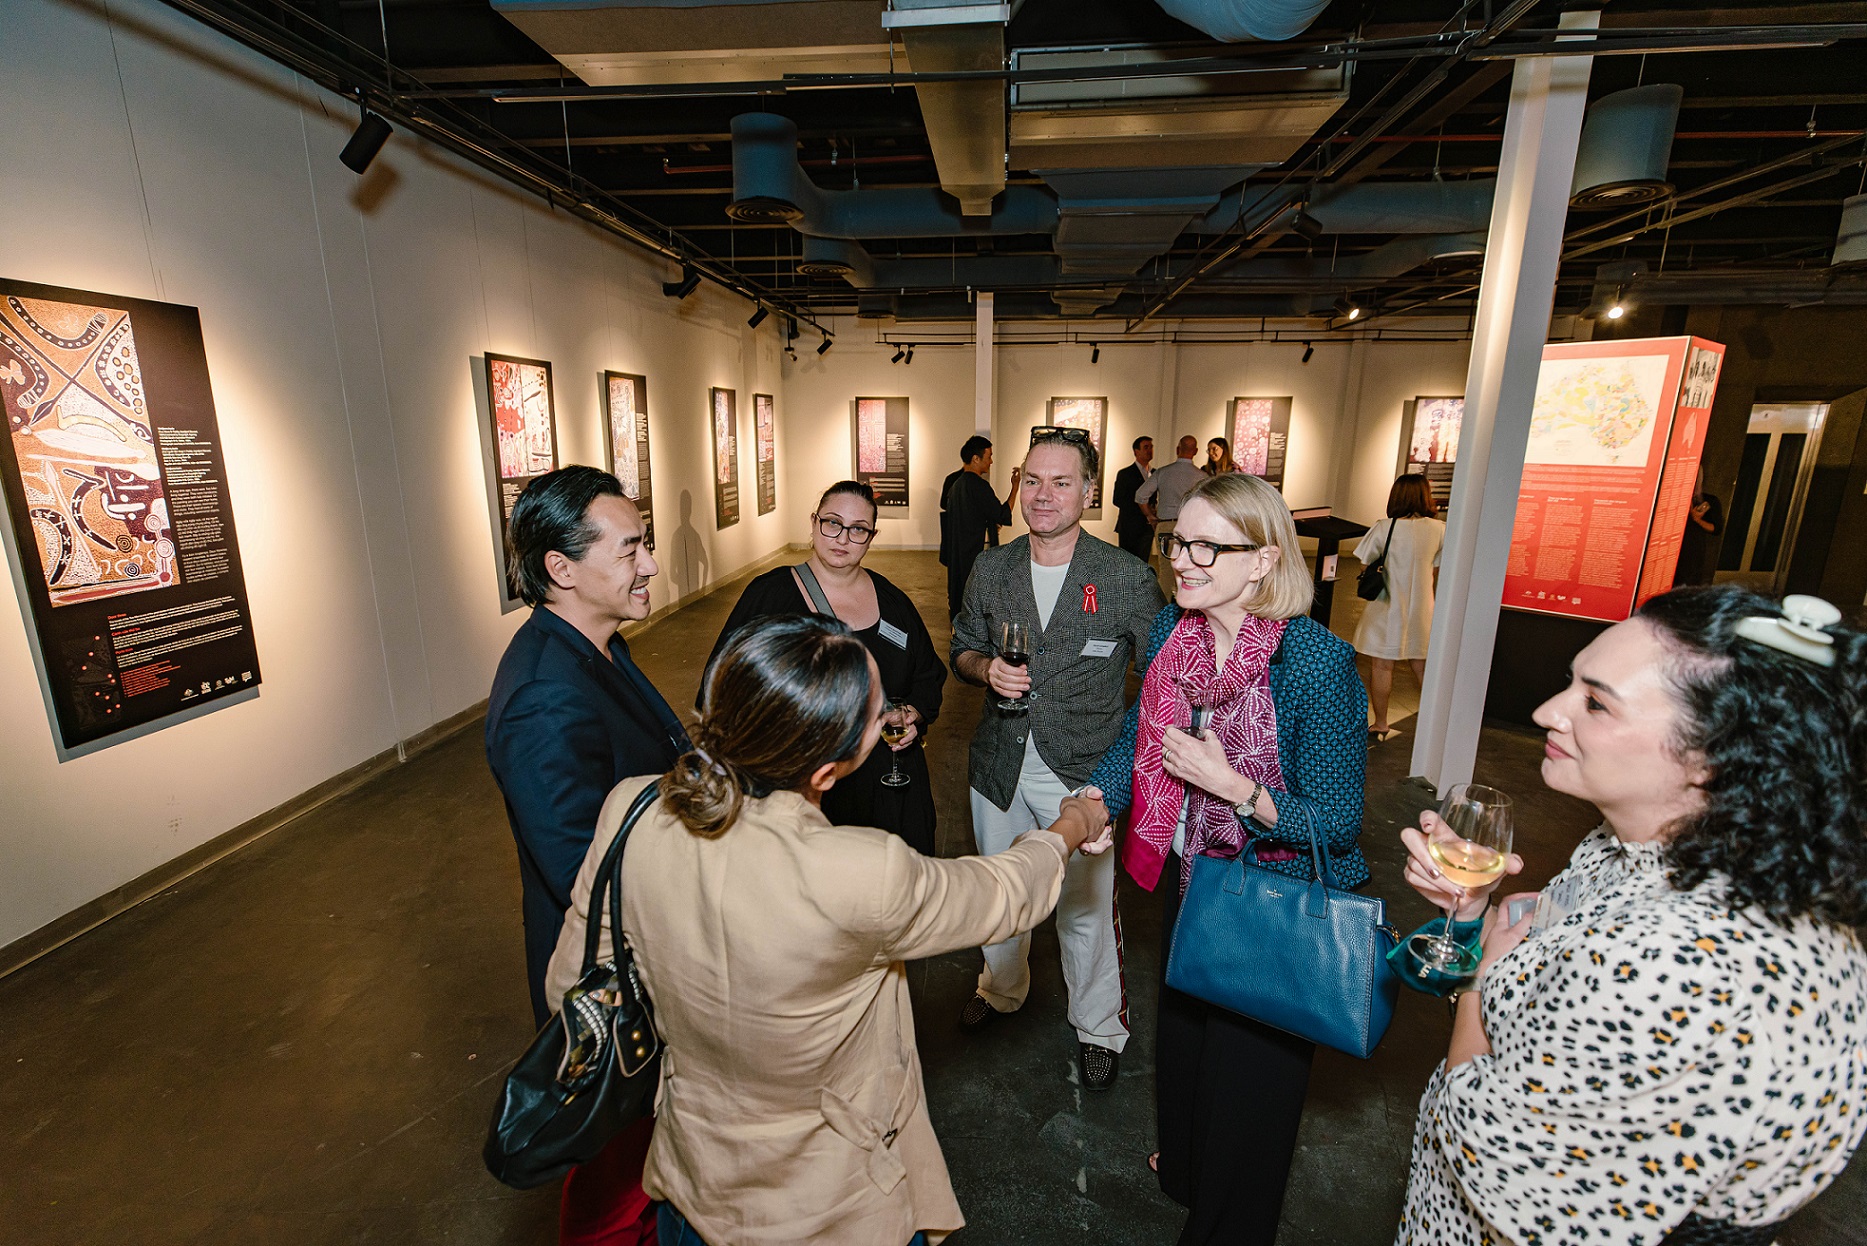 Yuendumu Doors exhibition of Australia’s indigenous cultures opens in Ho Chi Minh City